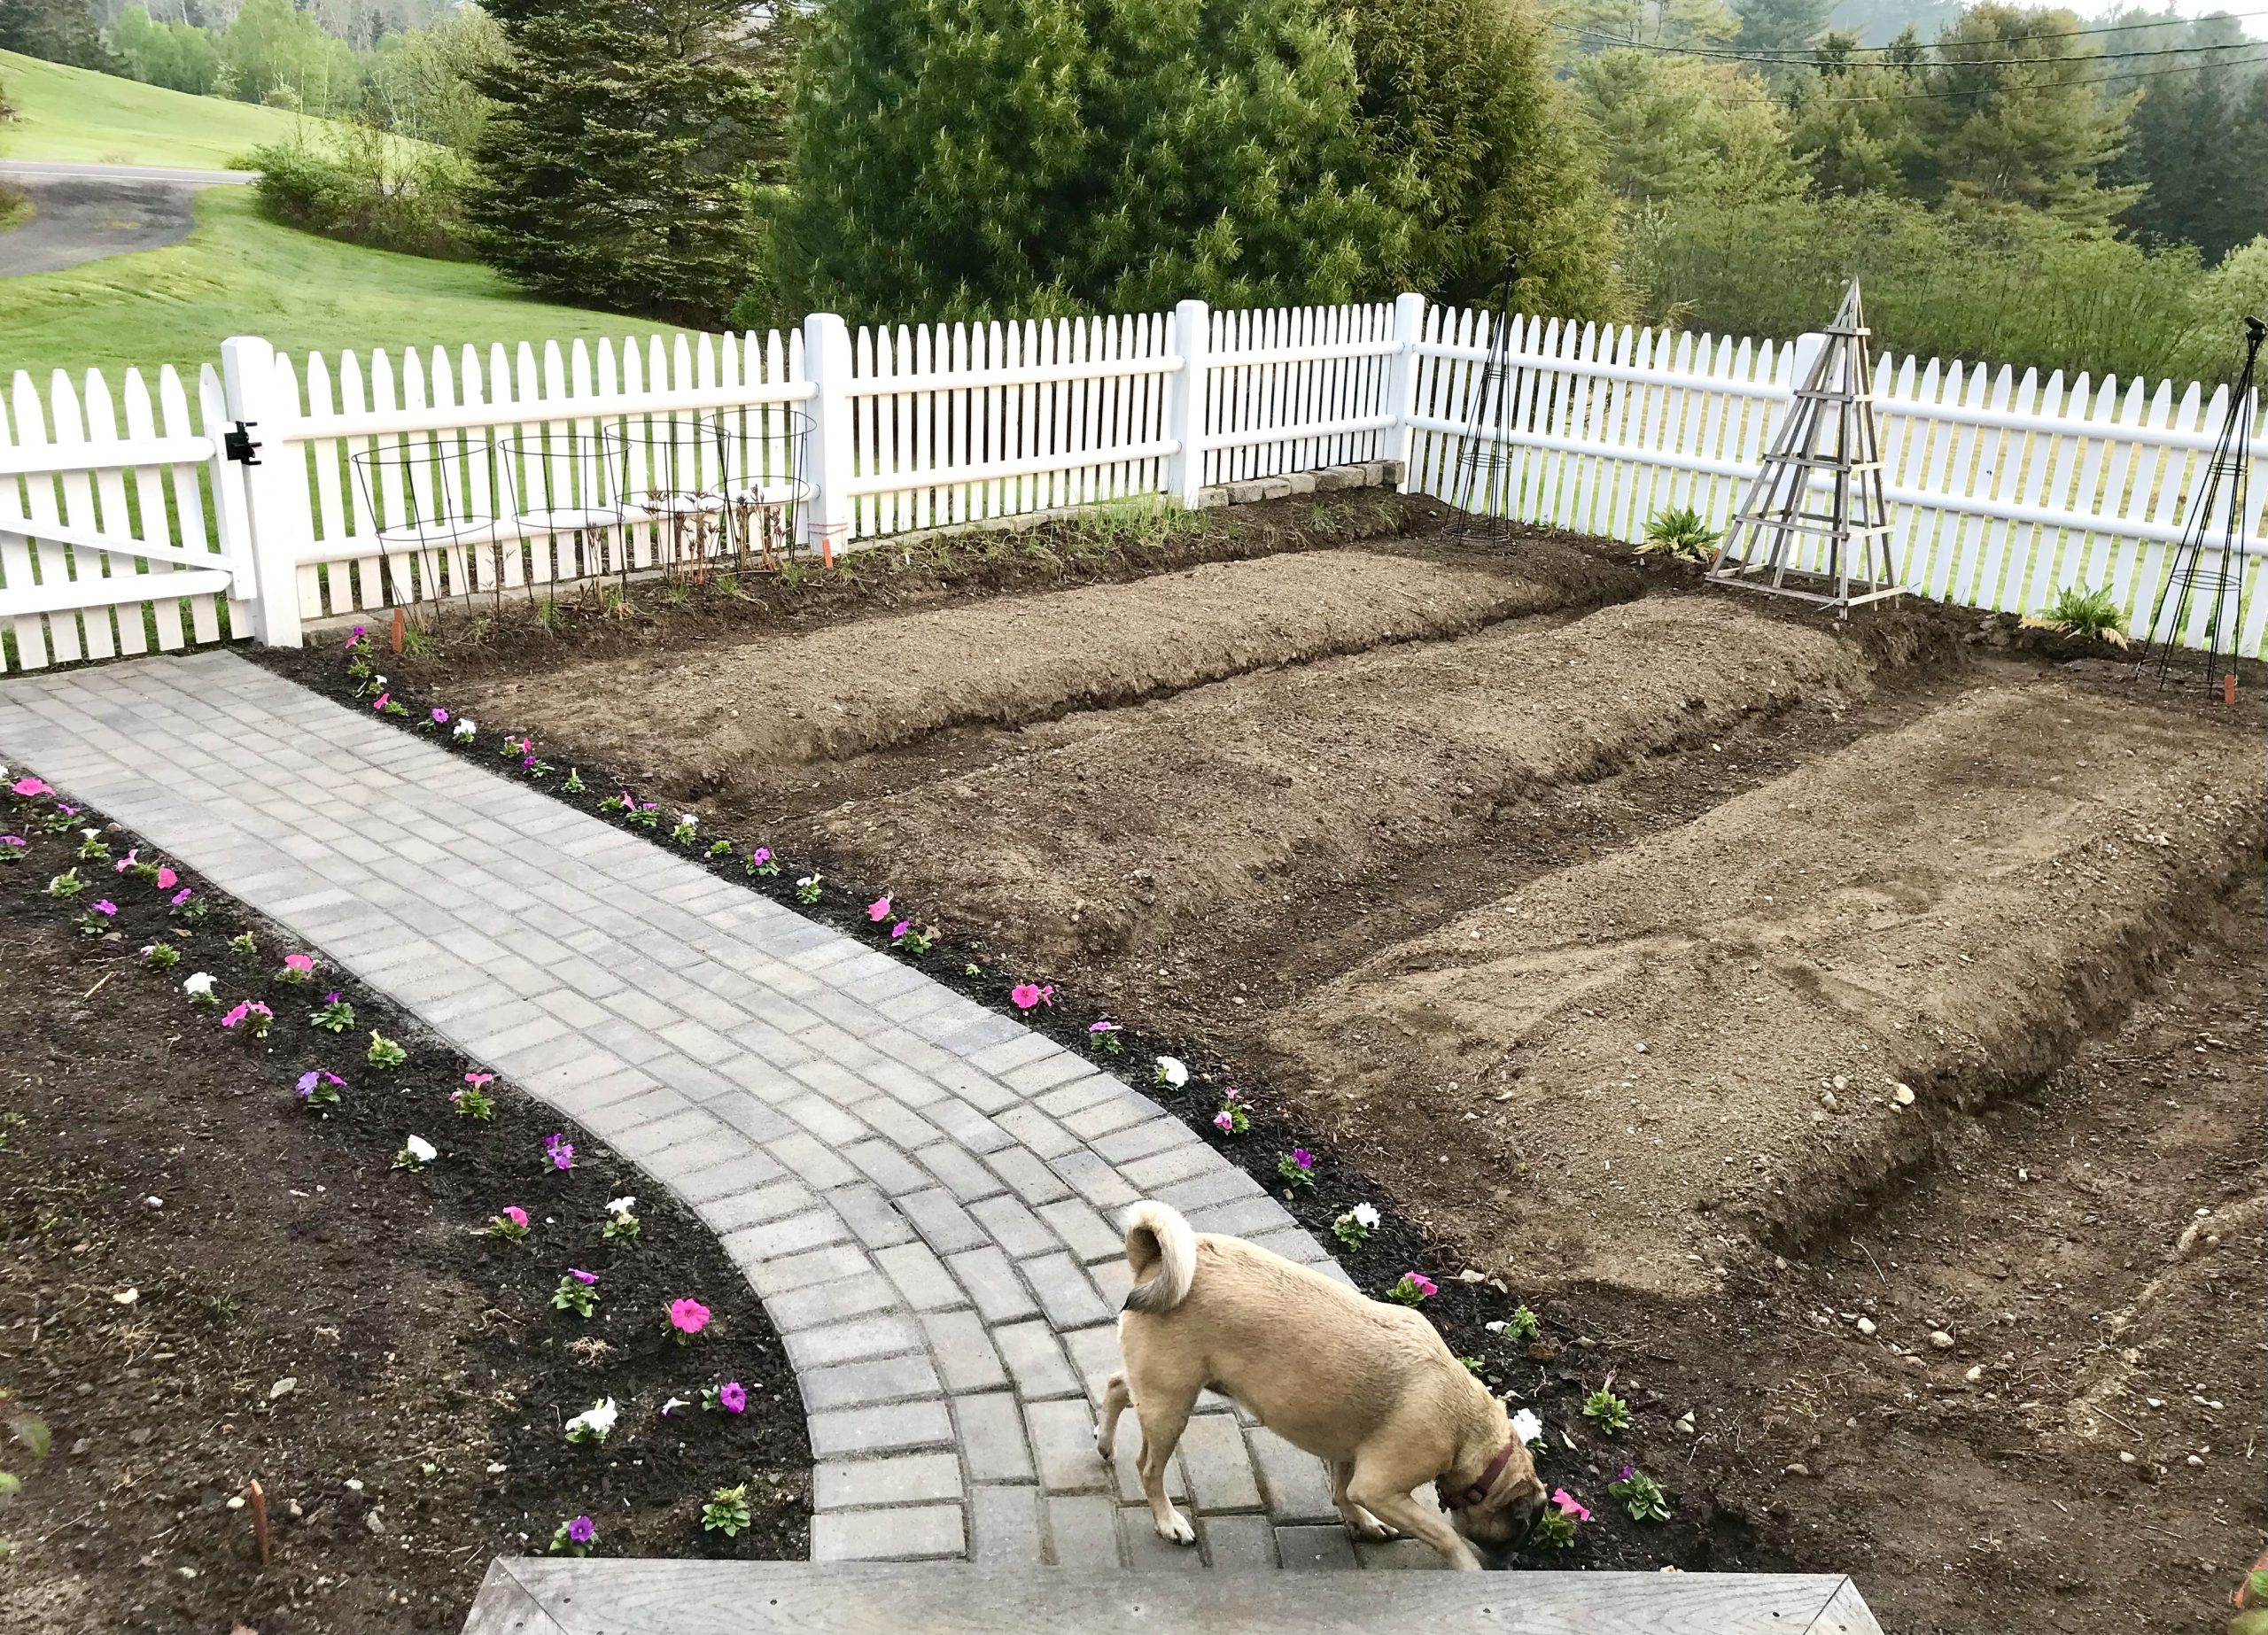 The HH Creates a New Brick Path for The Garden